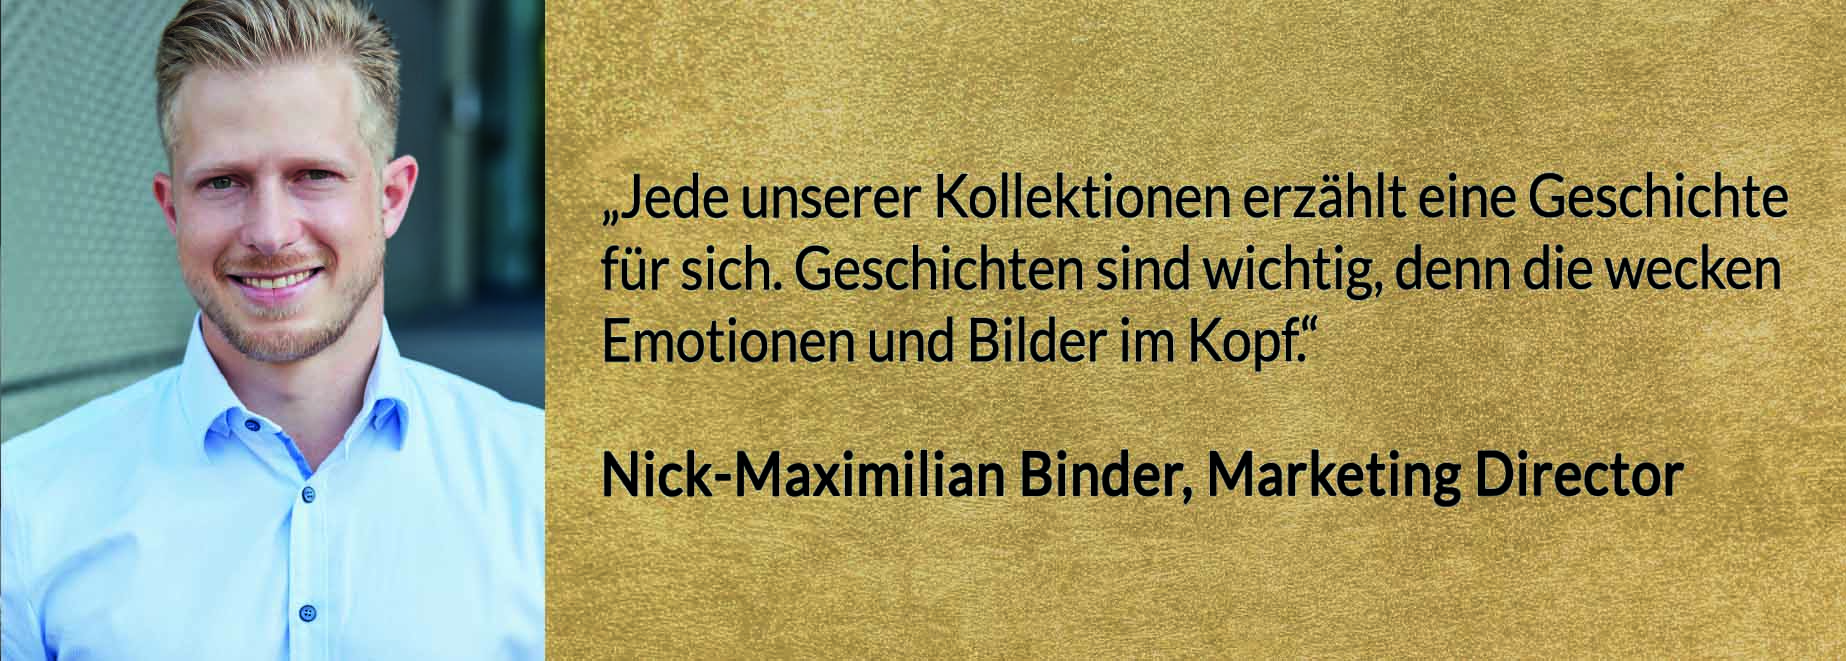 Premium_Binder_Jewellery_Nick_Maximilian_Binder_Marketing_Director